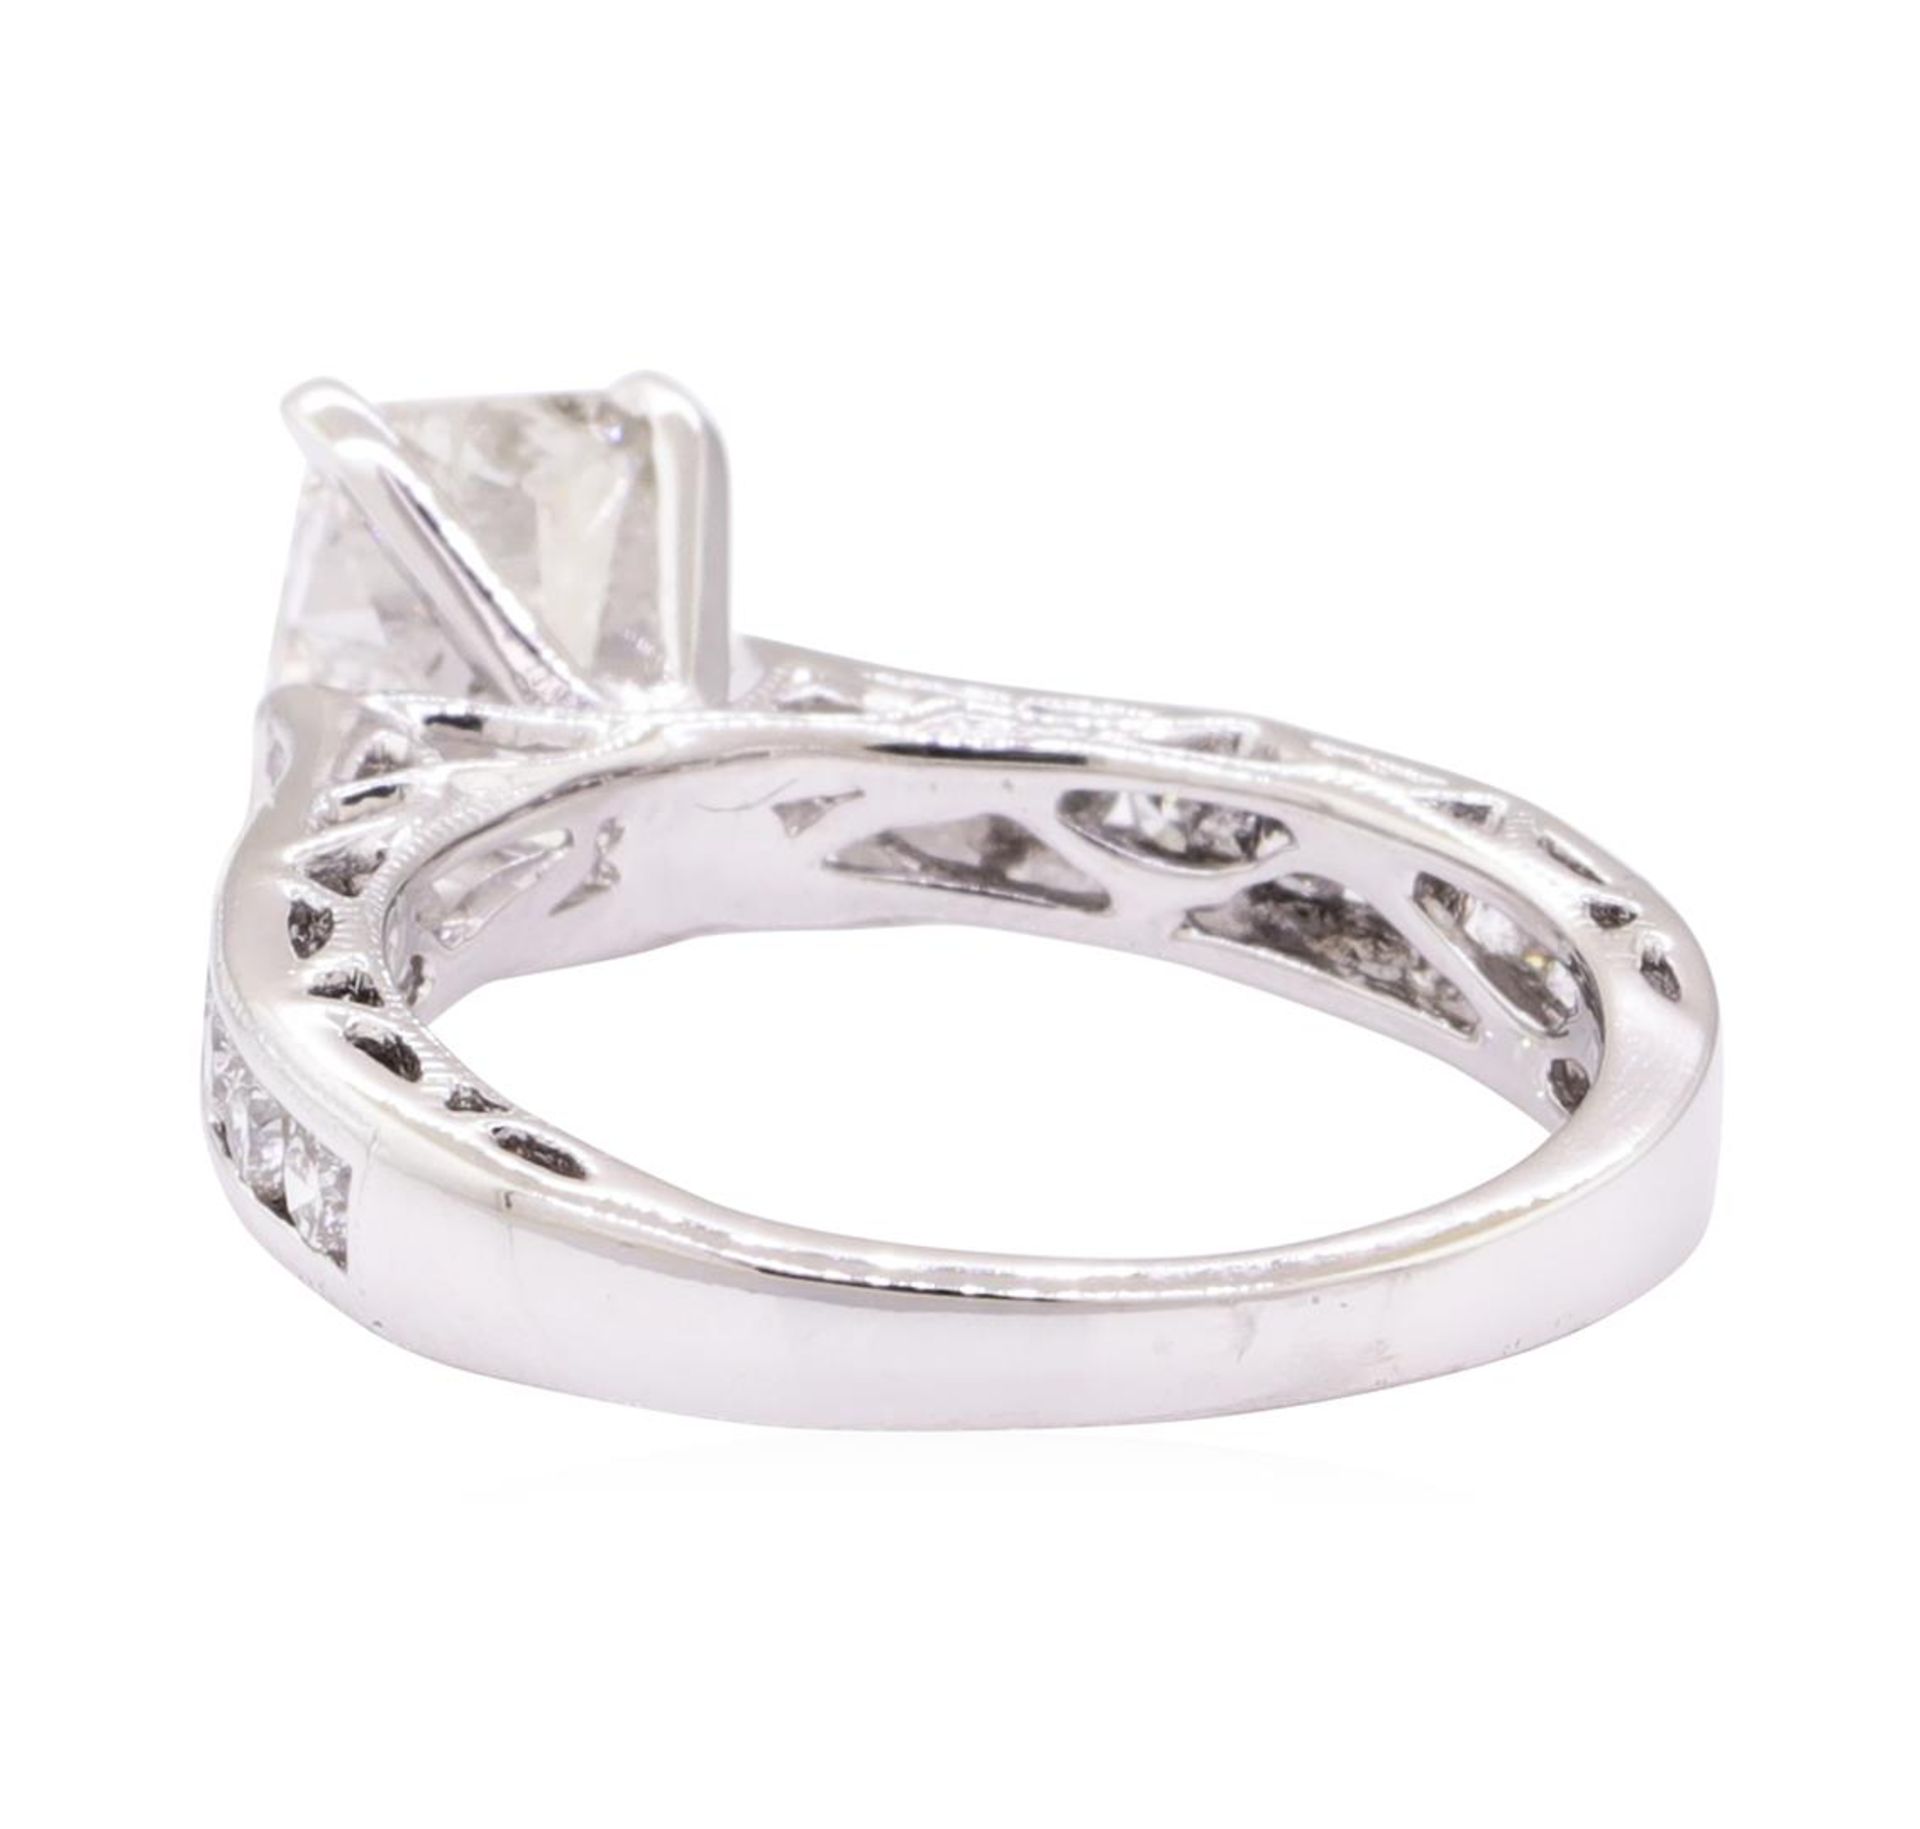 1.48 ctw Diamond Ring - 18KT White Gold - Image 3 of 5